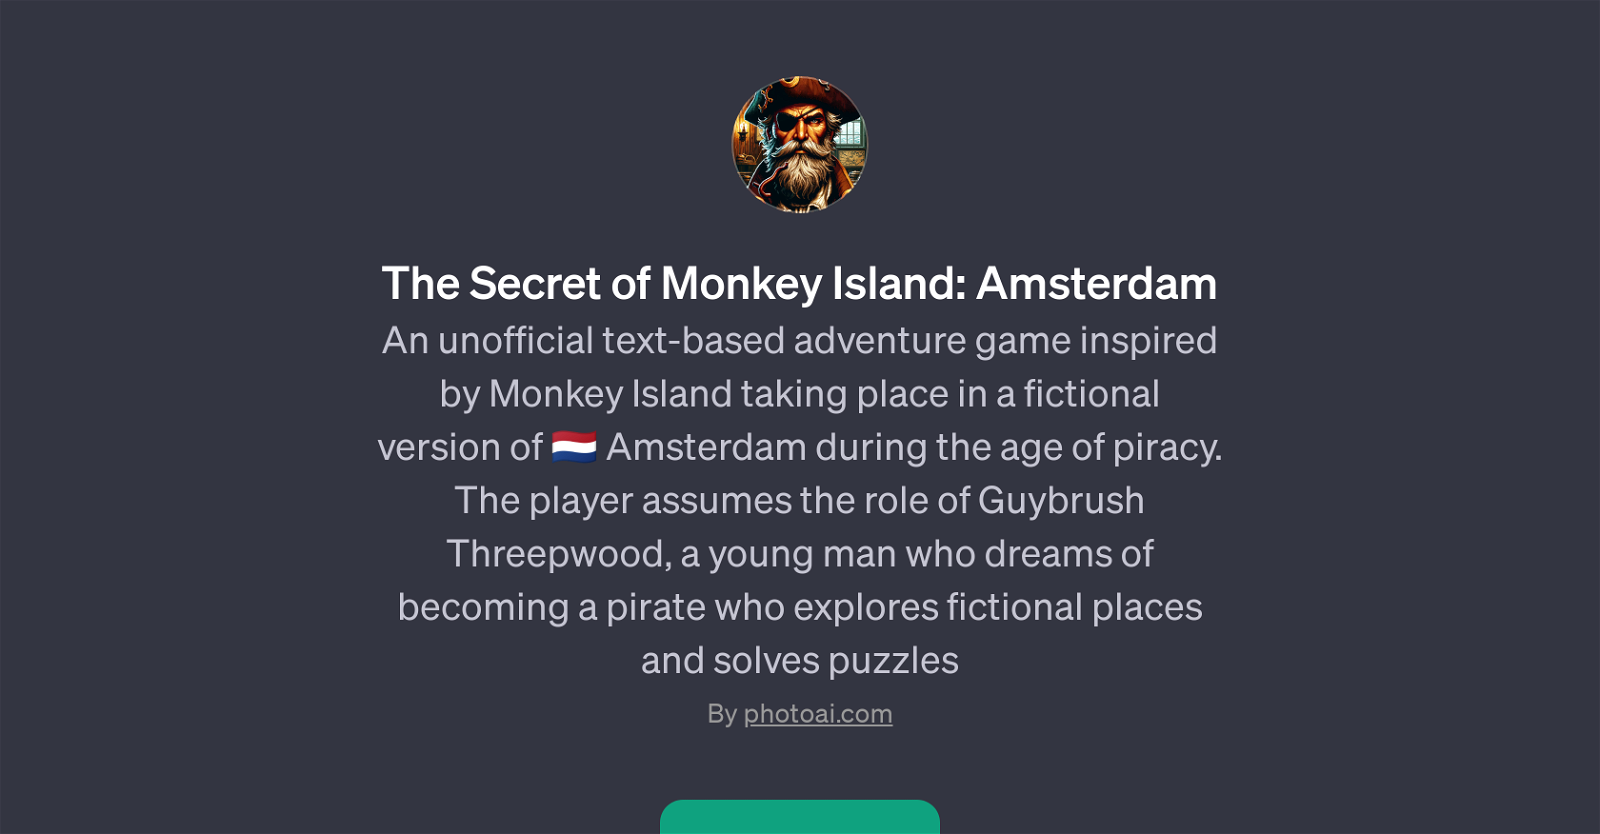 The Secret of Monkey Island: Amsterdam website